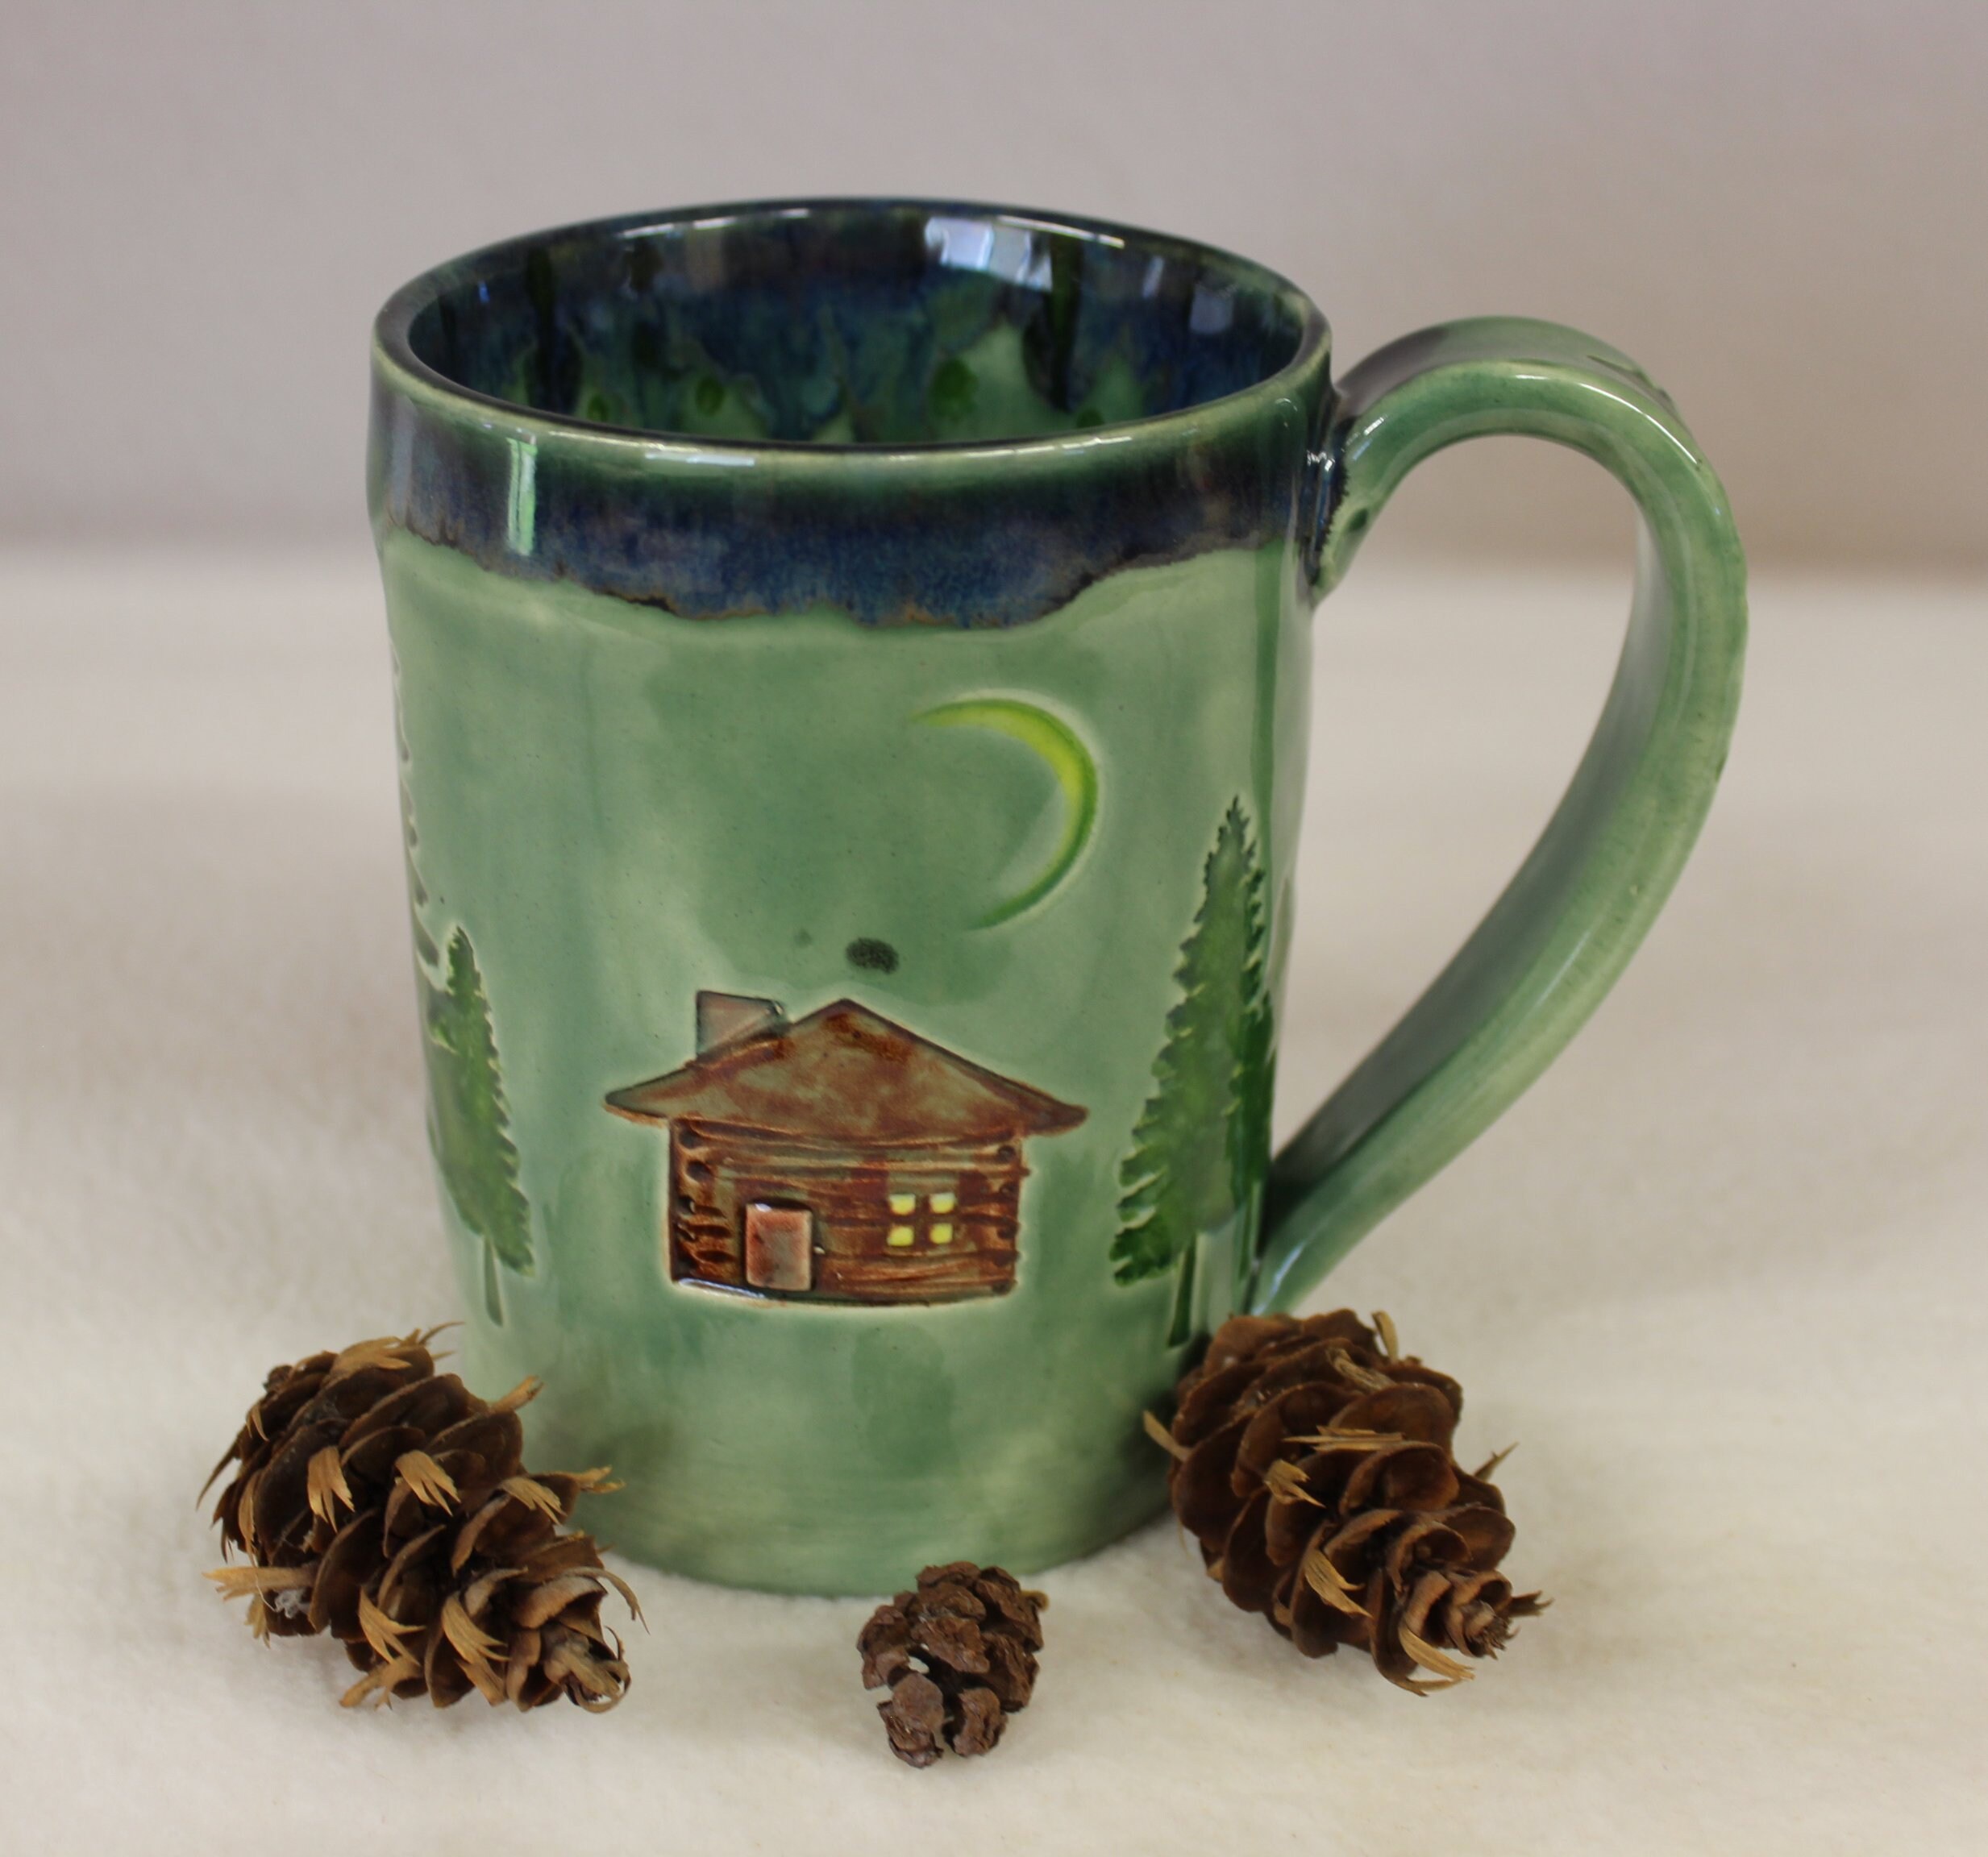 FE Vintage Coffee Mug, Extra Large Holding Volume With Farmhouse